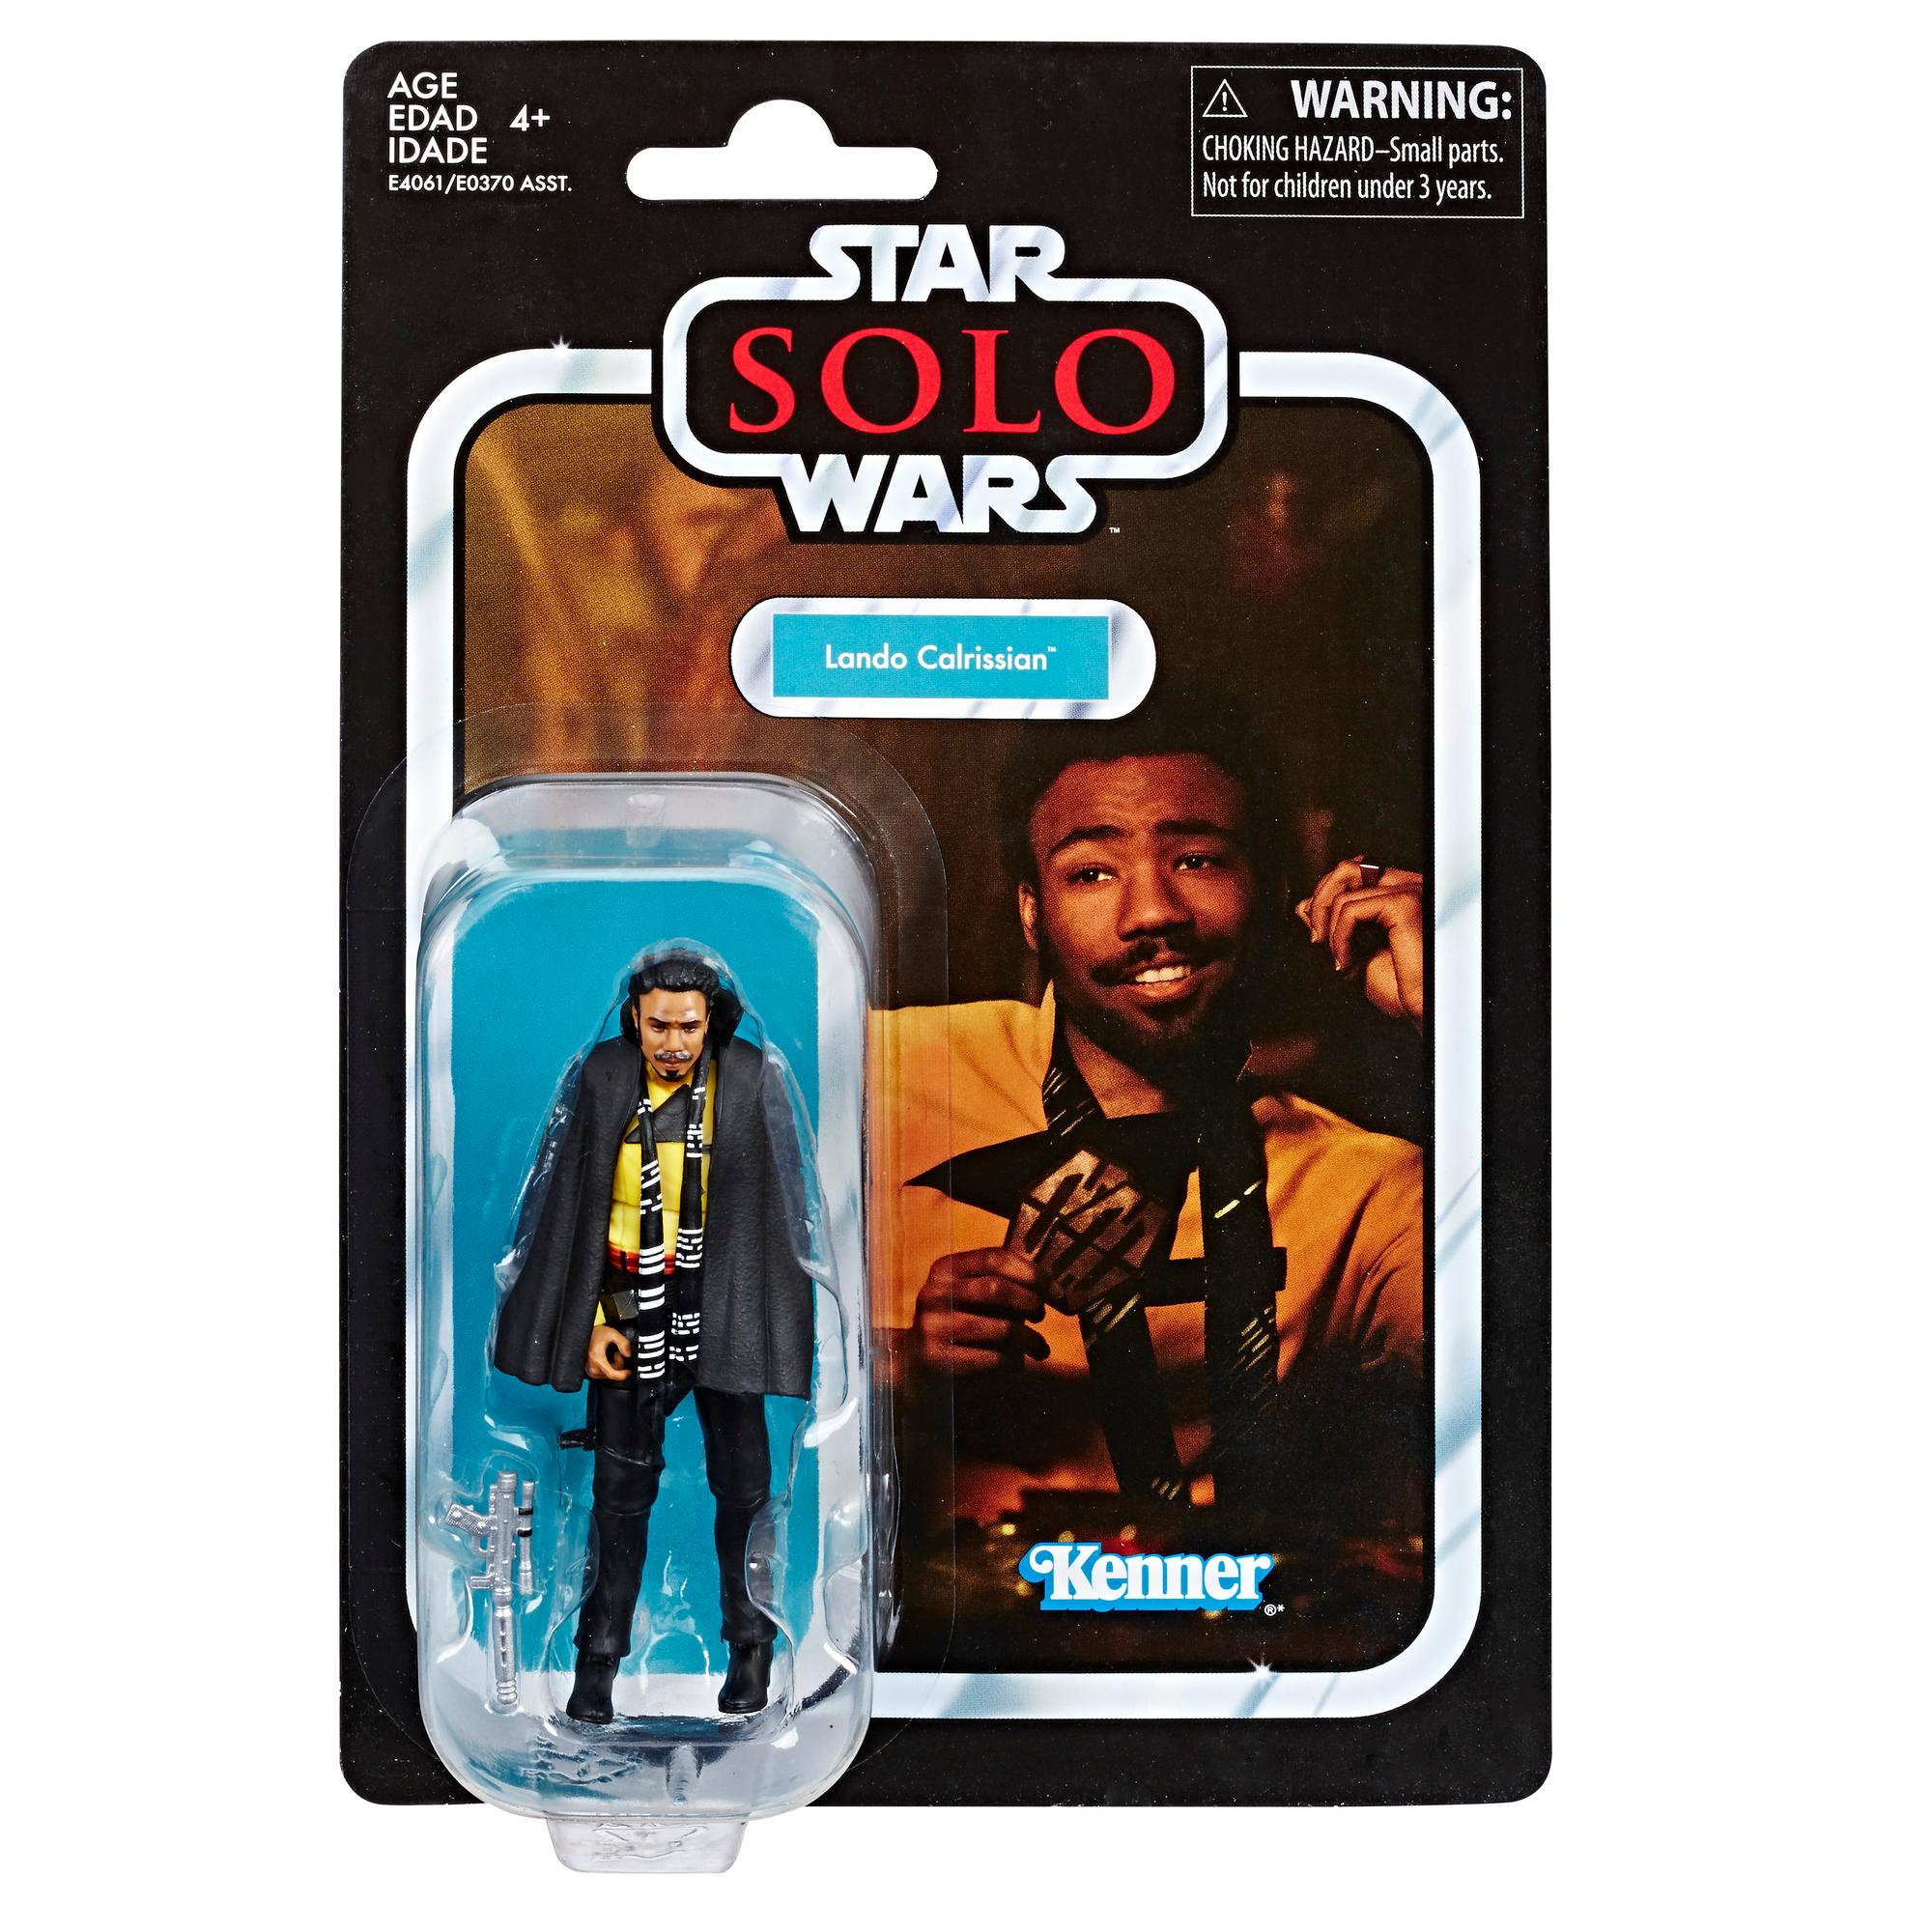 Star Wars The Vintage Collection Serie 2: Solo Star Wars - Lando Calrissian